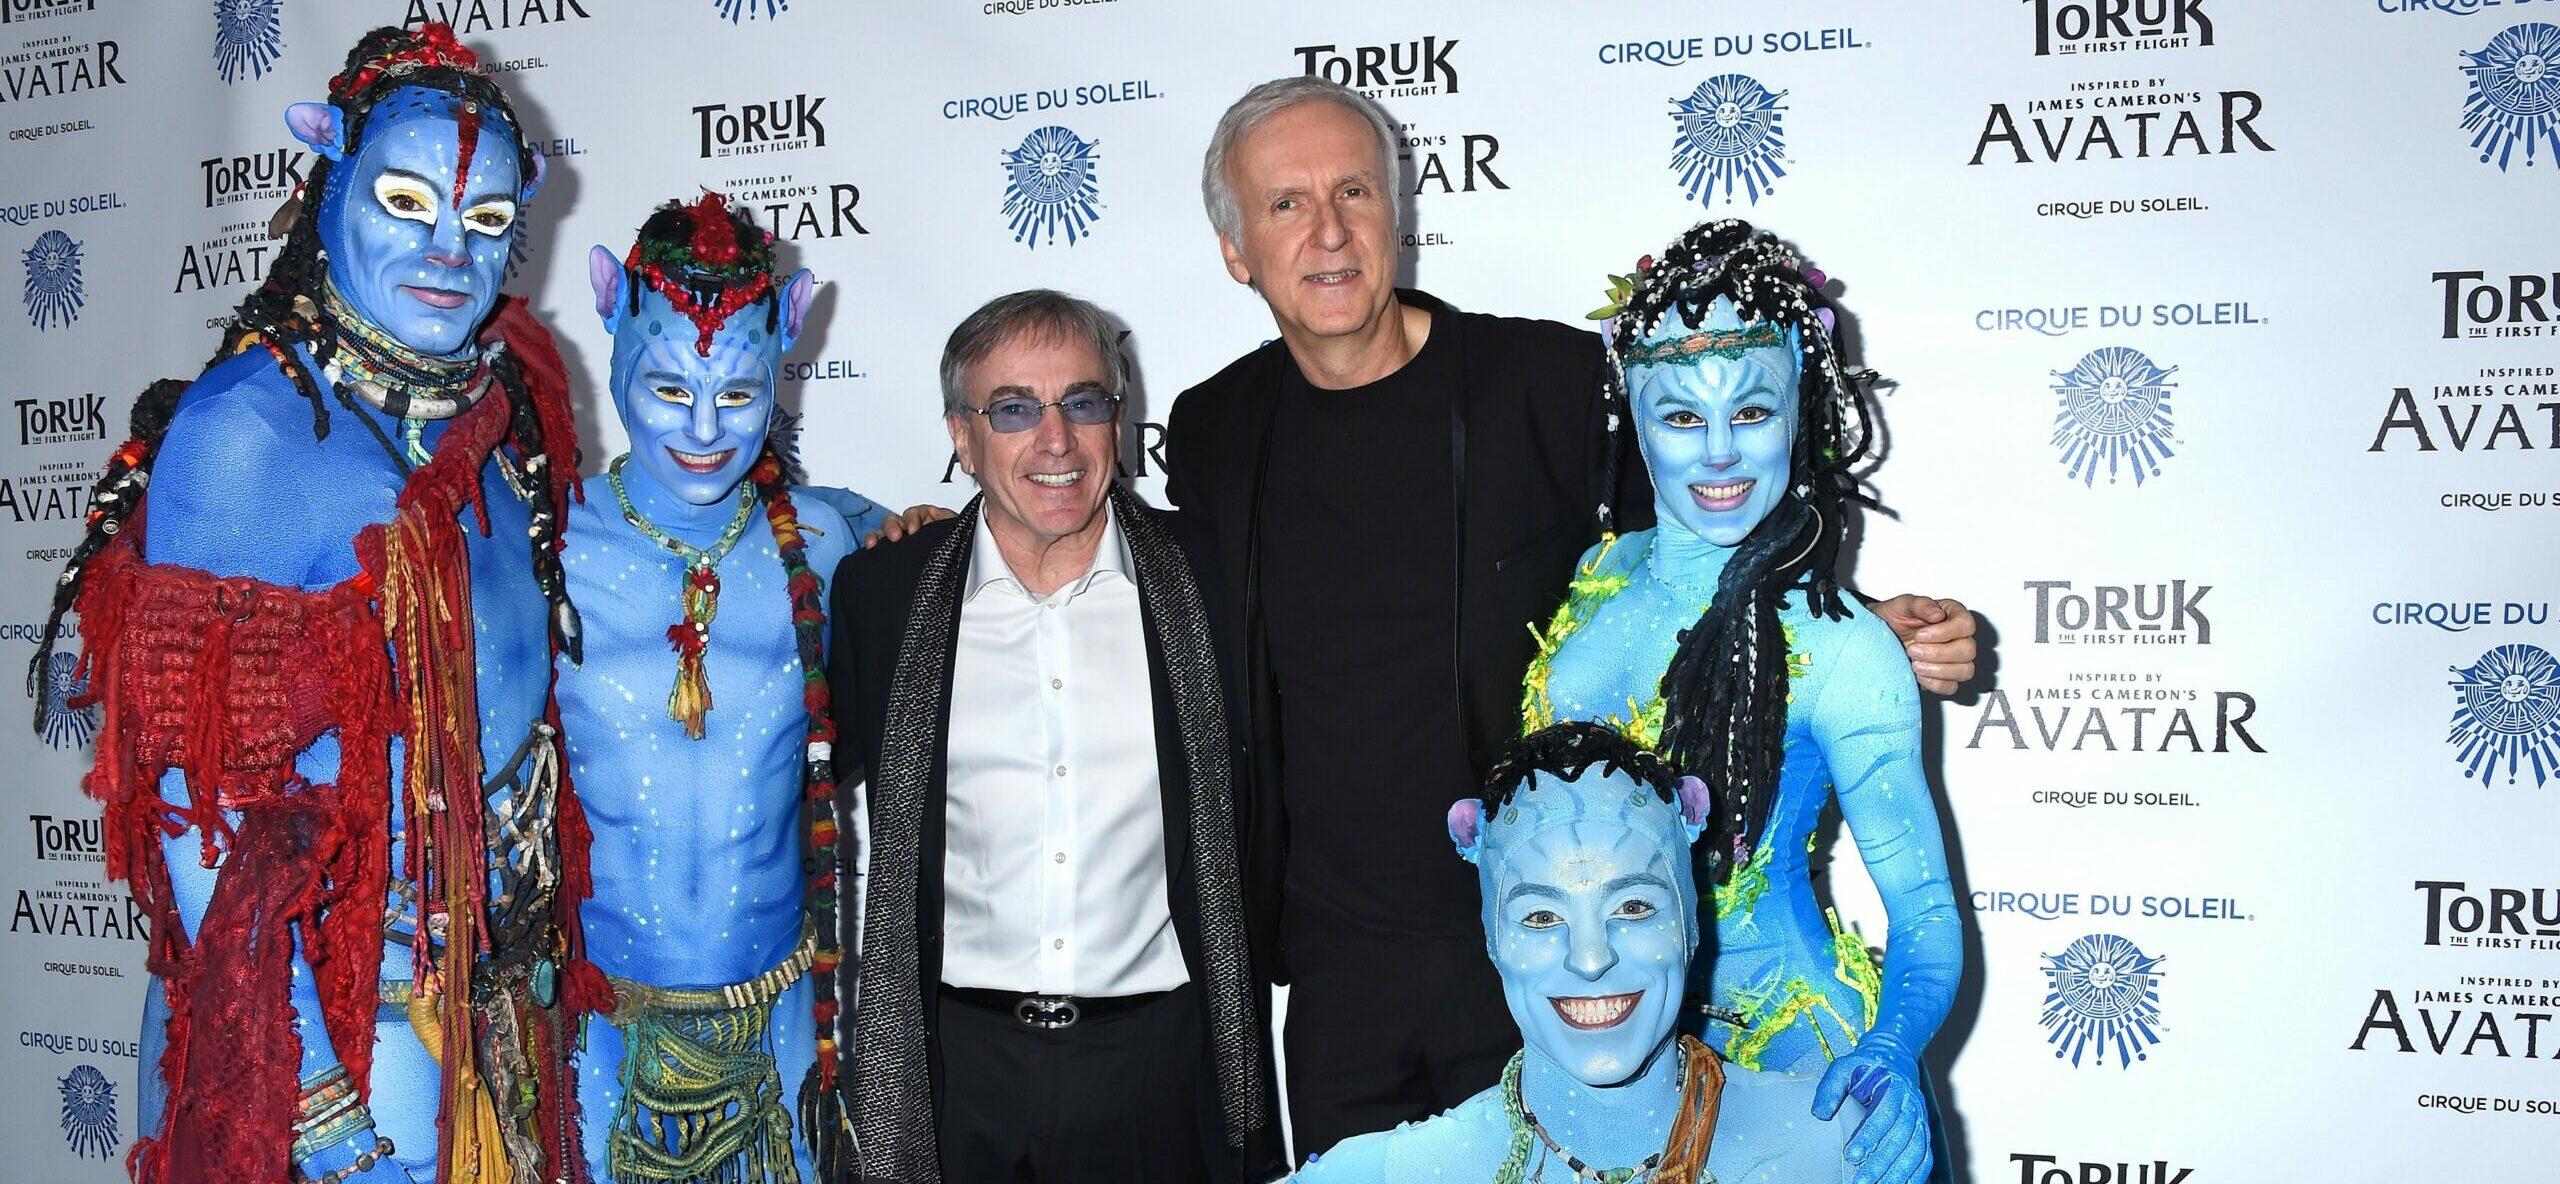 James Cameron at Avatar Cirque du Soleil show